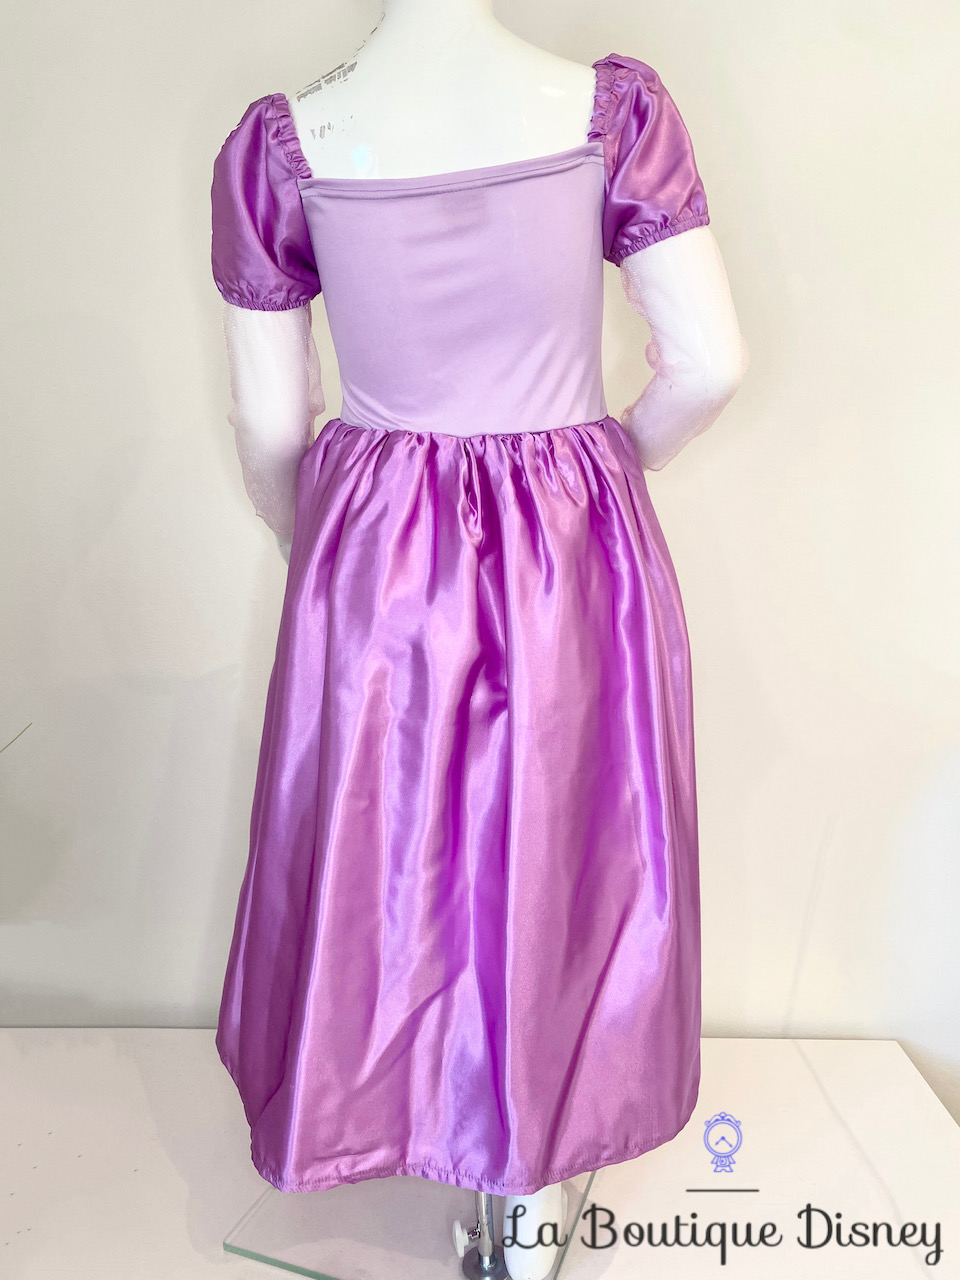 déguisement-raiponce-disney-rubies-taille-8-ans-robe-princesse-violet-coeur-princesse-pascal-18